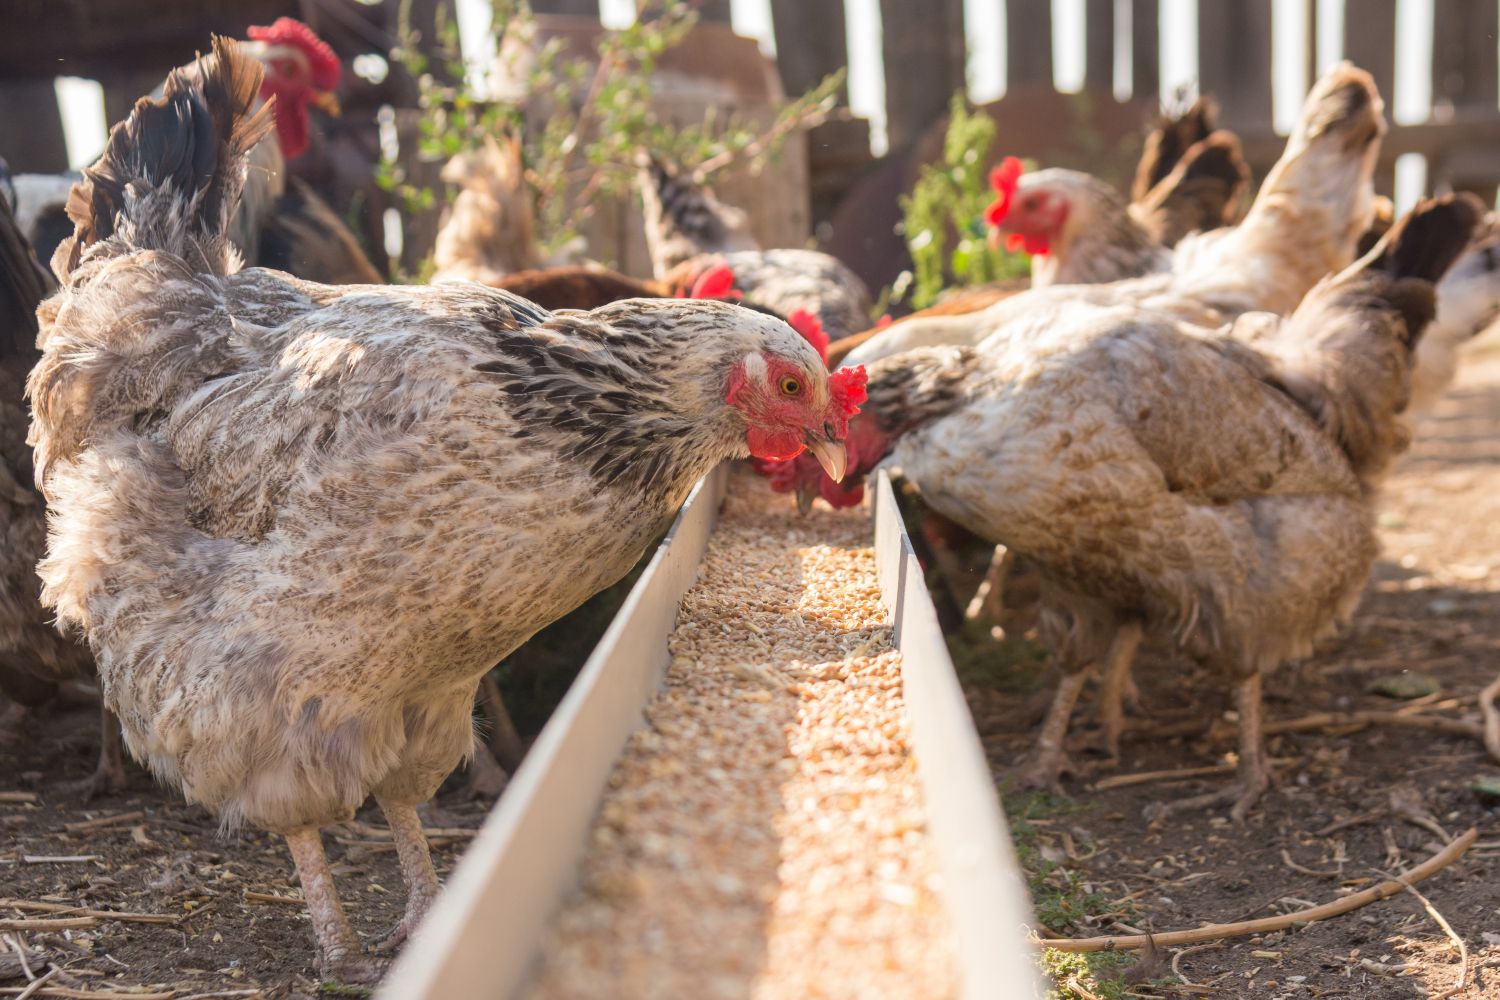 Advances in Poultry Nutrition